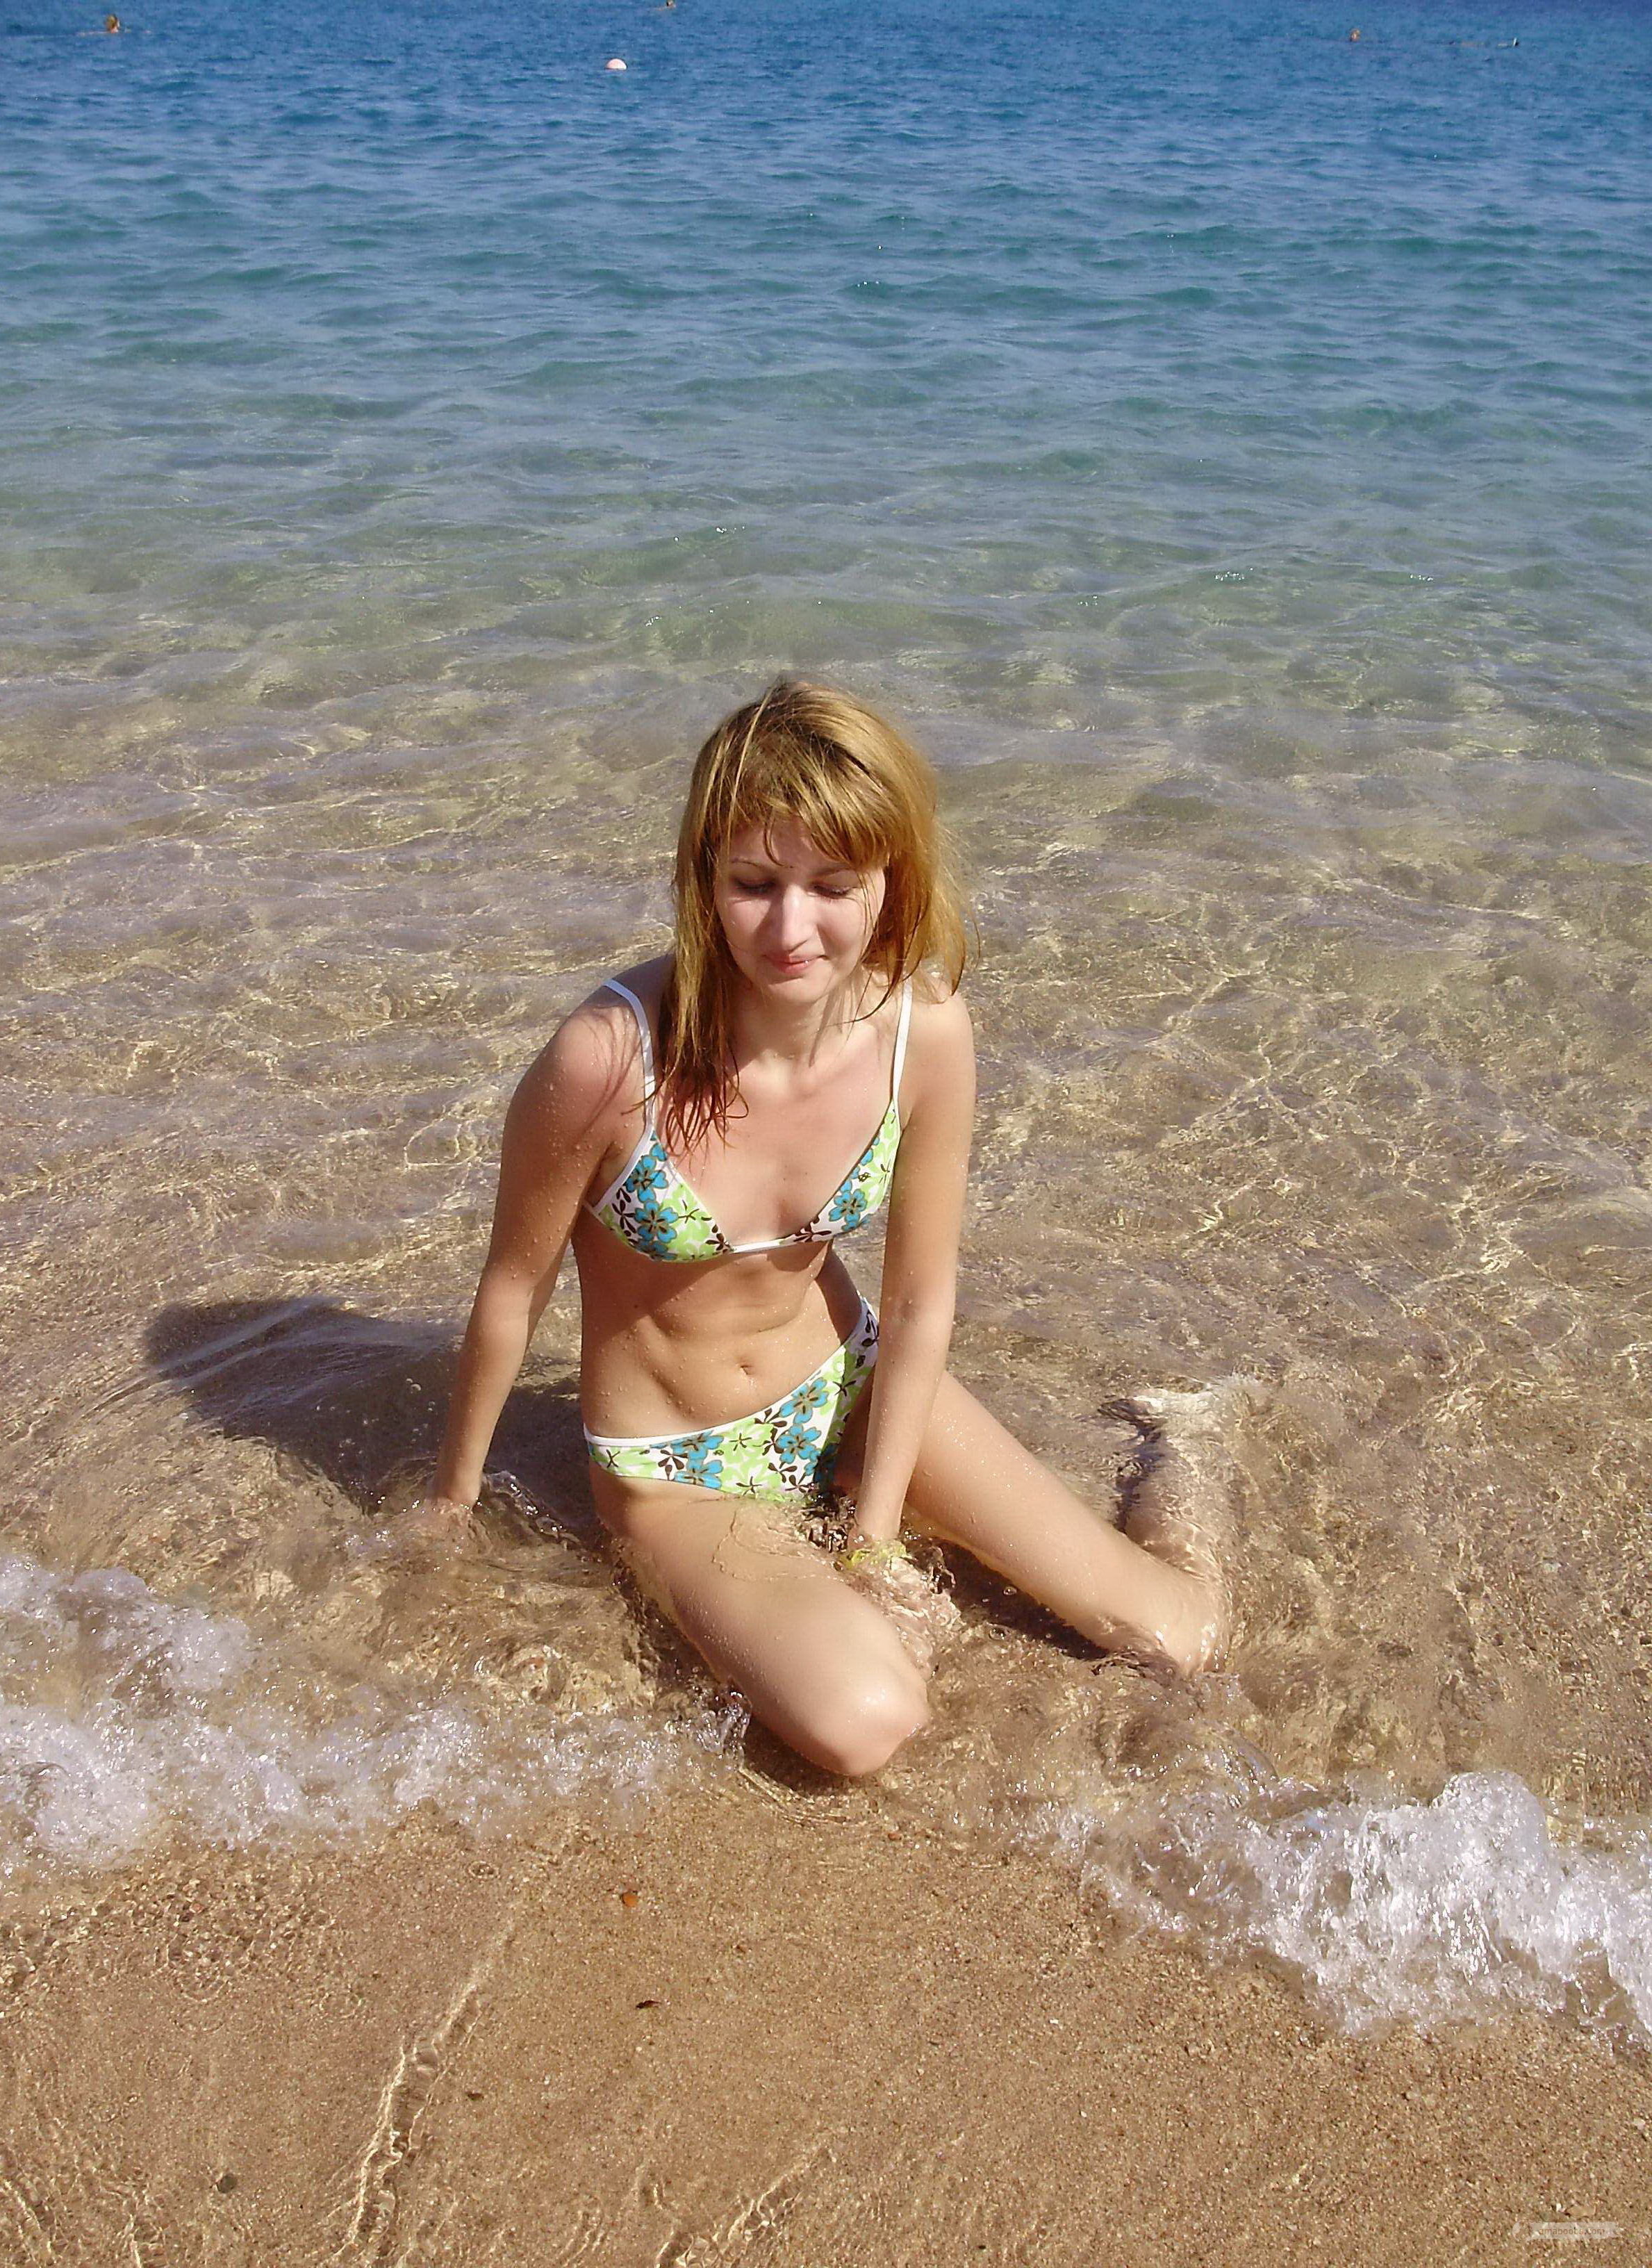 https://amaboobs.com/uploads/posts/2022-07/hot-girl-on-the-beach-309.jpg